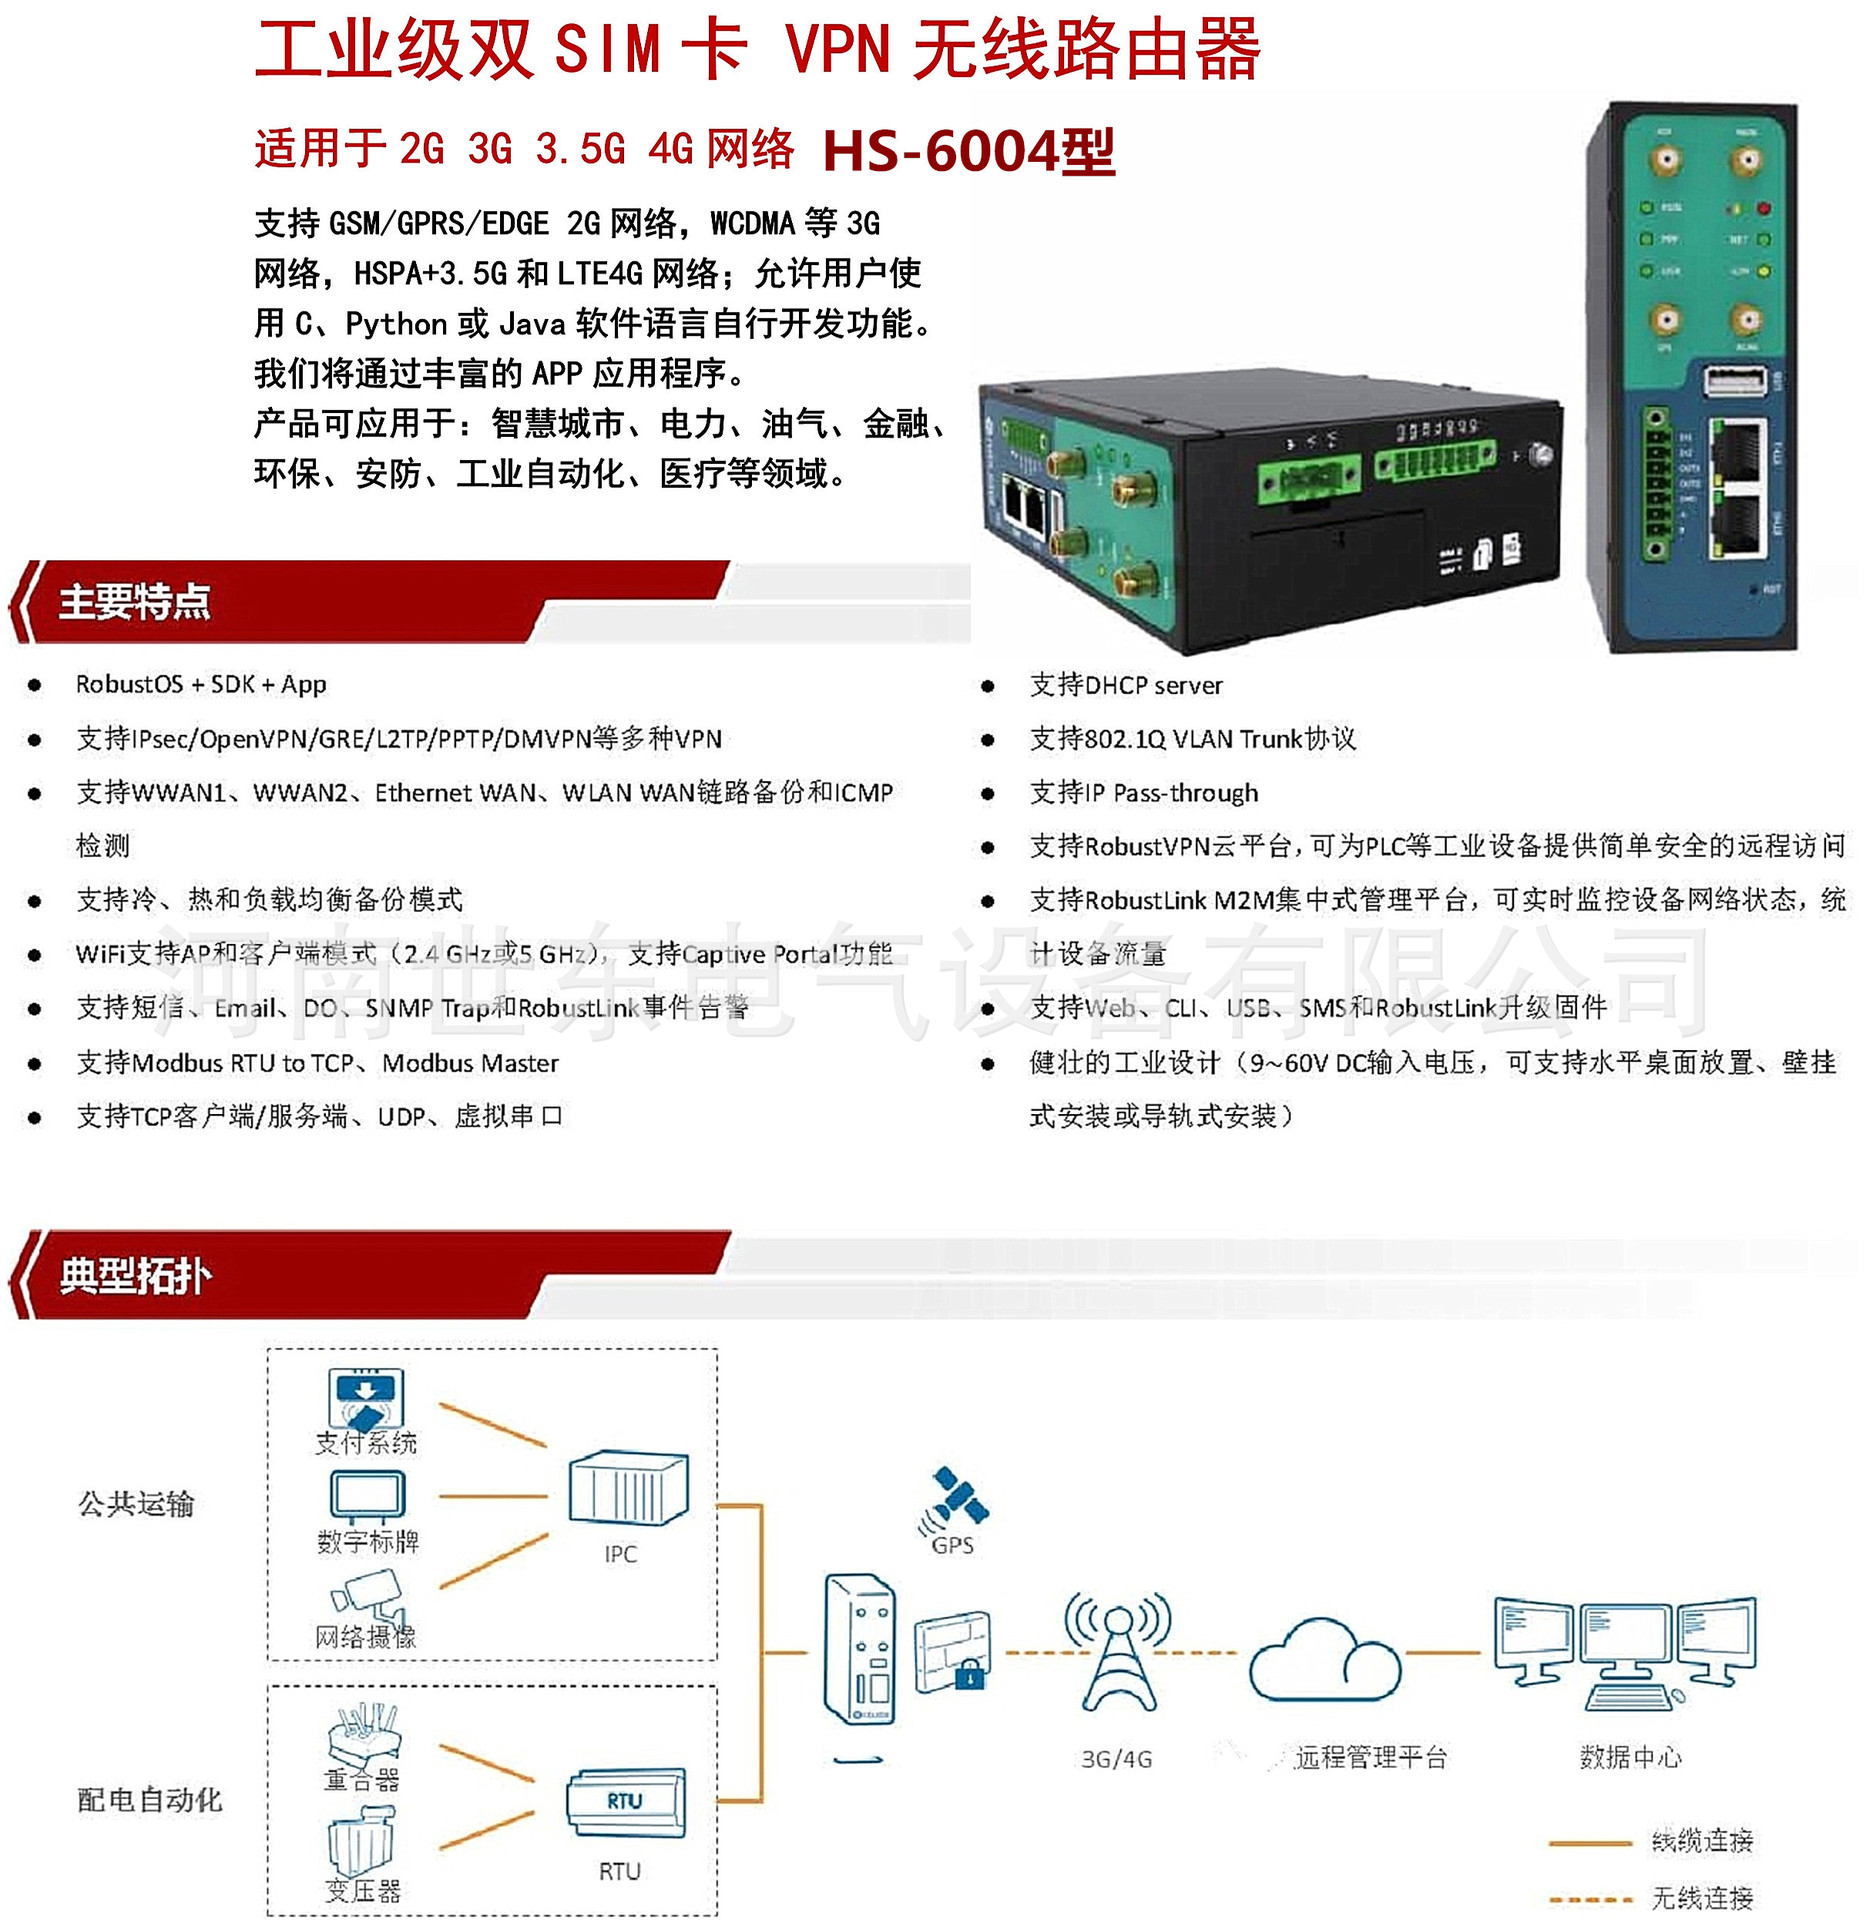 HS-6004型 工业级双SIM卡 VPN无线路由器_1_副